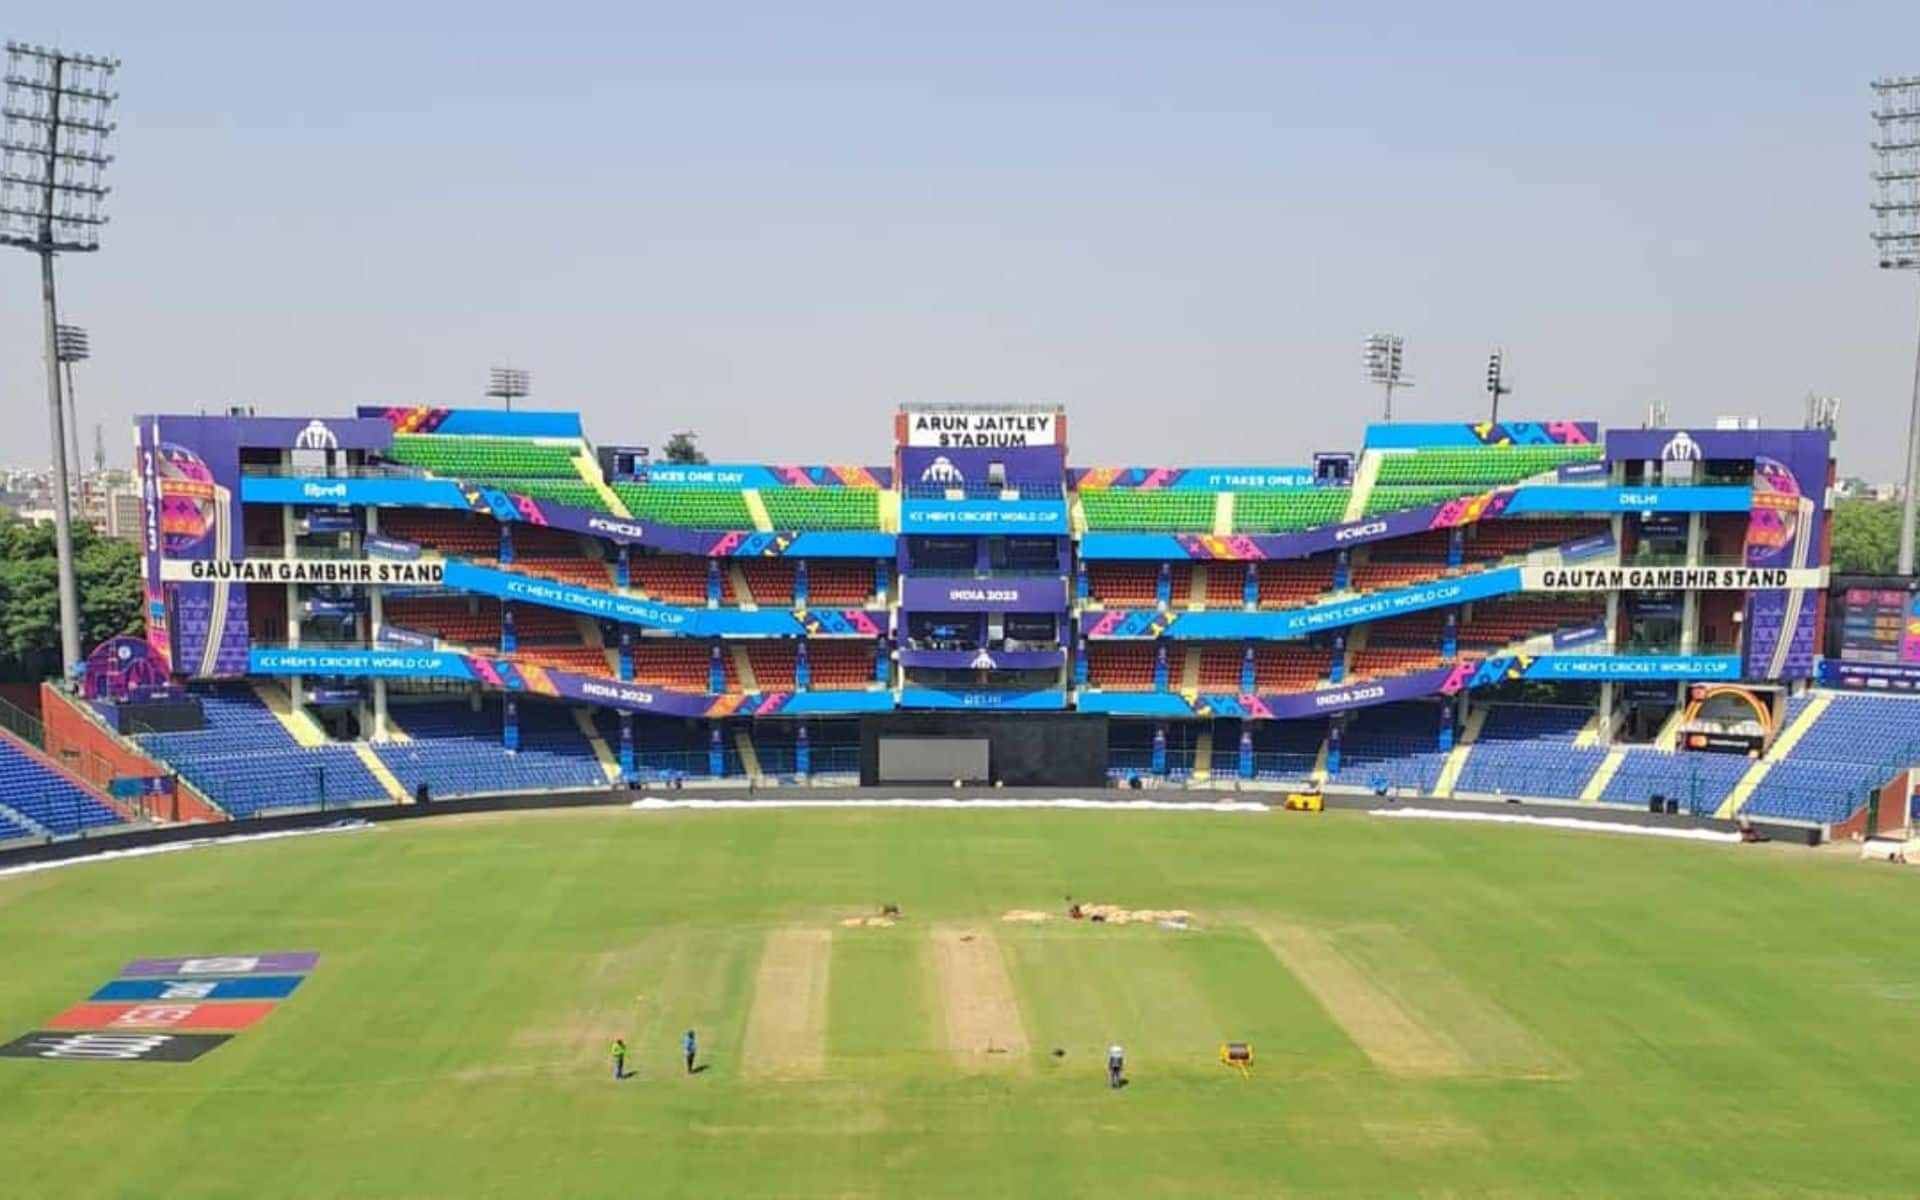 Arun Jaitley Stadium IPL Records Ahead Of DC vs SRH
